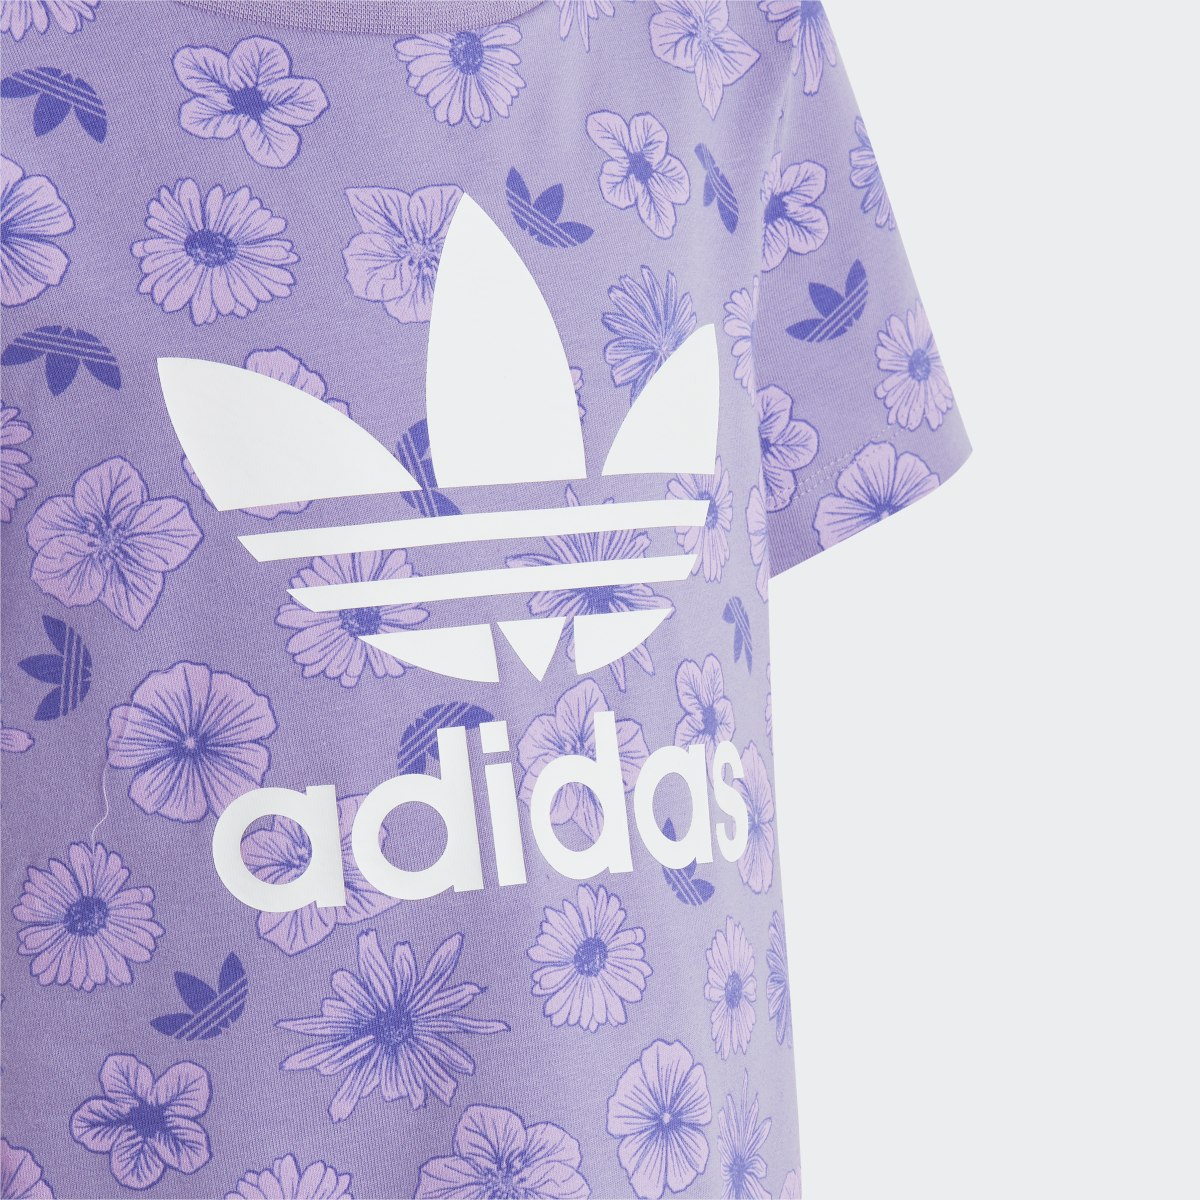 Adidas Floral Kleid-Set. 9